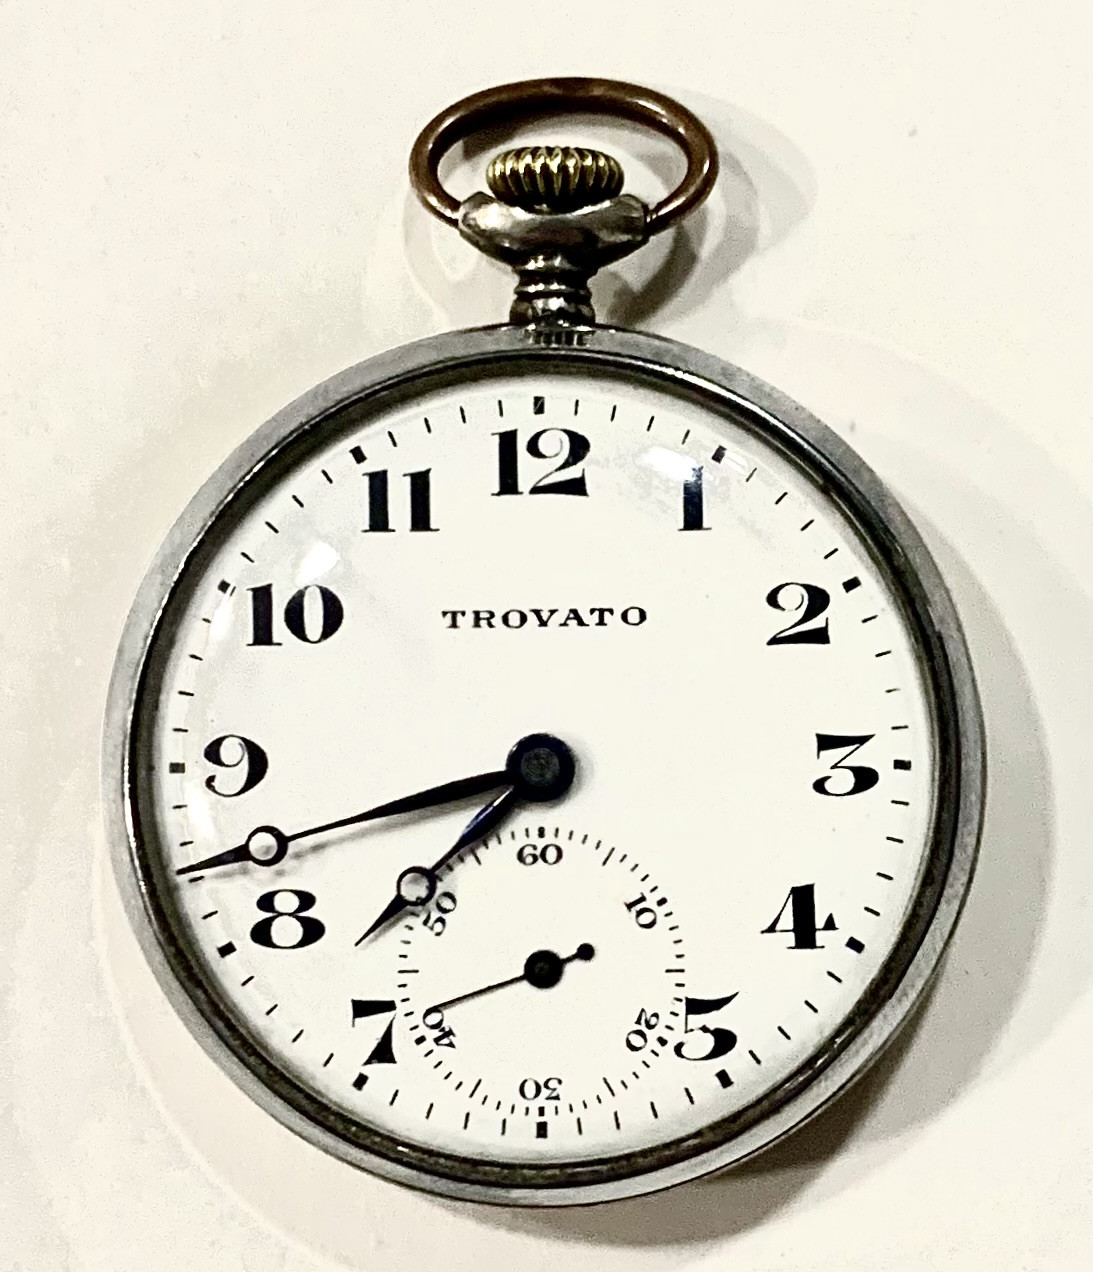 Reloj de bolsillo de plata Suizo del siglo XIX.